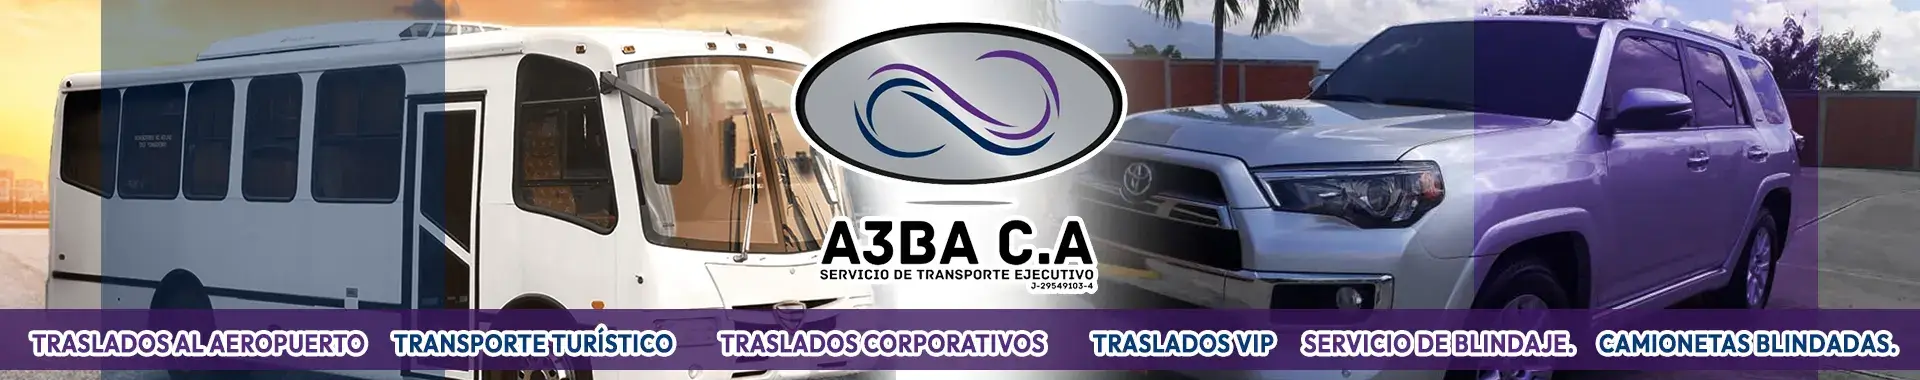 Imagen 2 del perfil de Servicio de Transporte Ejecutivo A3BA